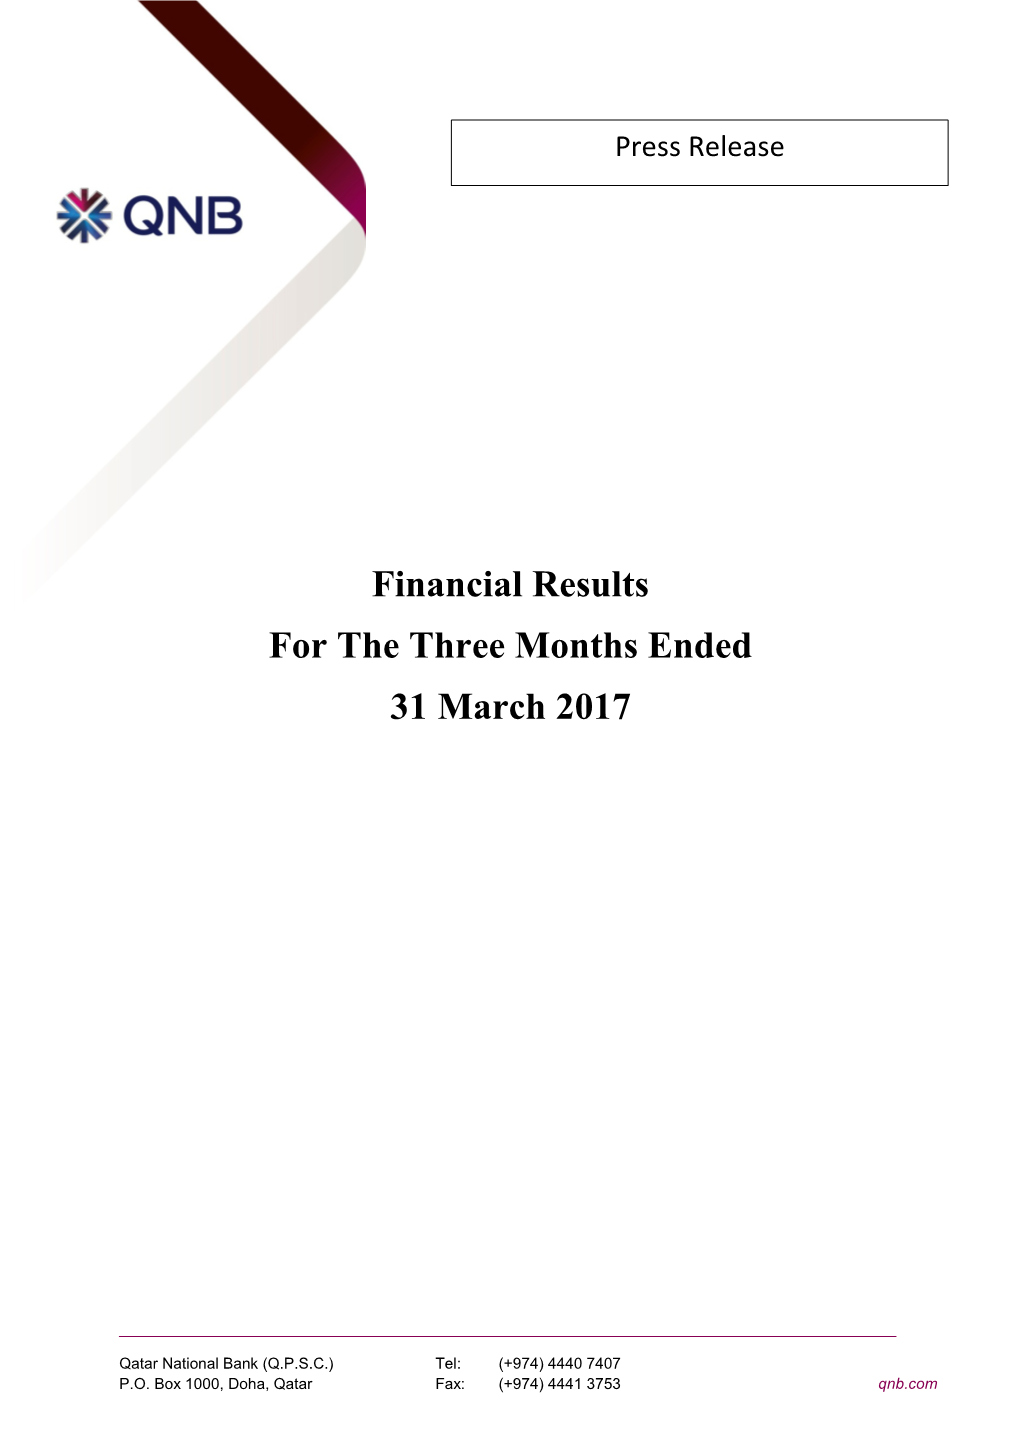 QNB Group's Key Financial Highlights